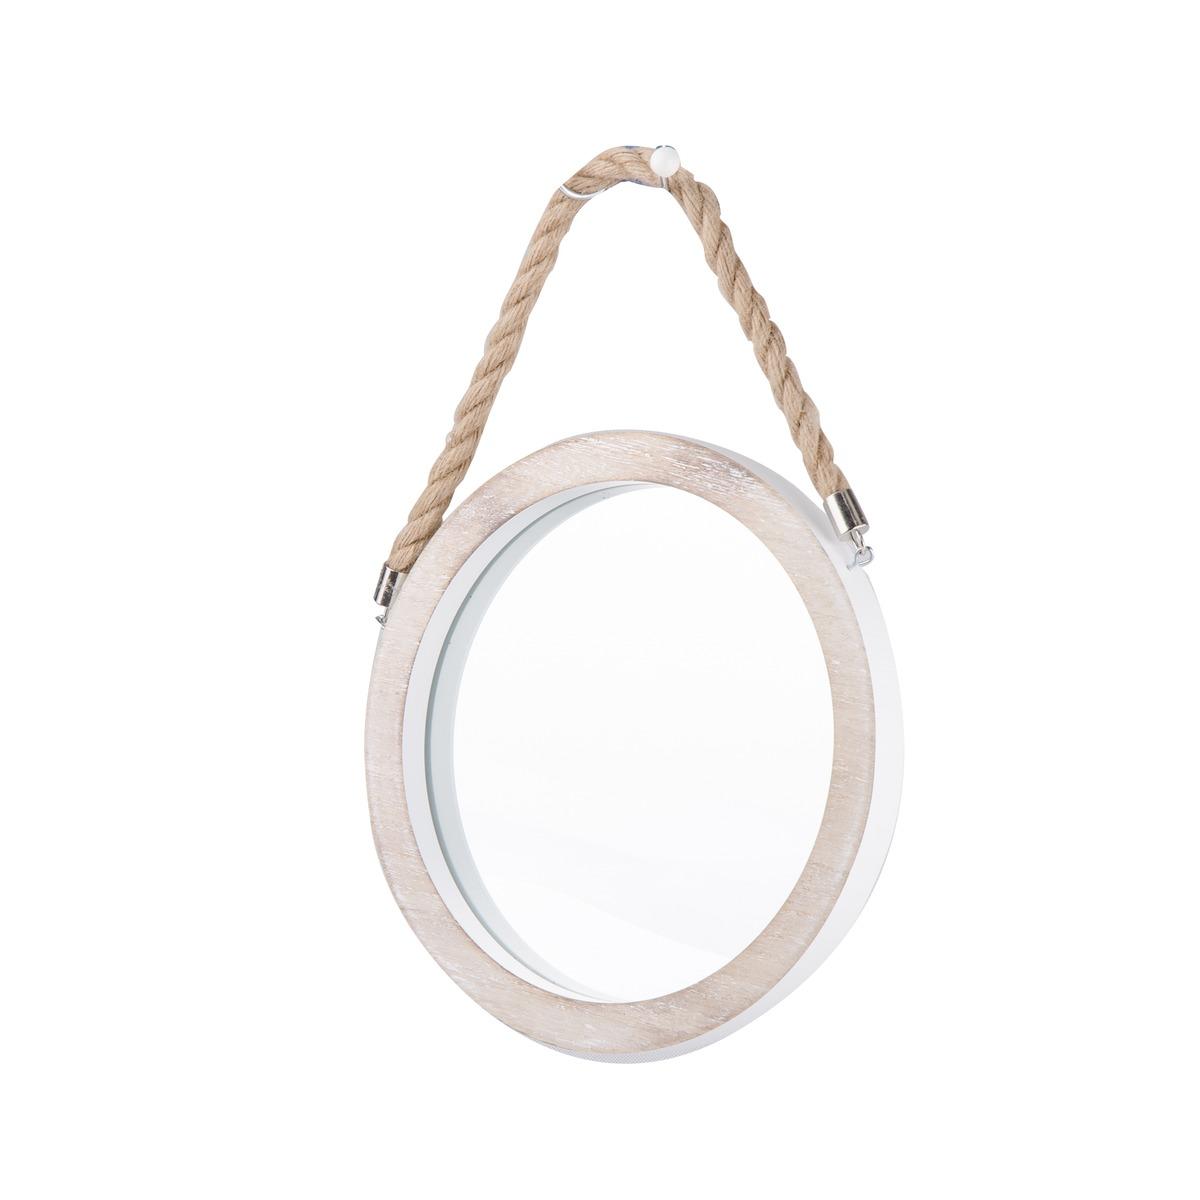 Miroir rond attache corde - 29,7 x H 42 cm - Blanc, Marron